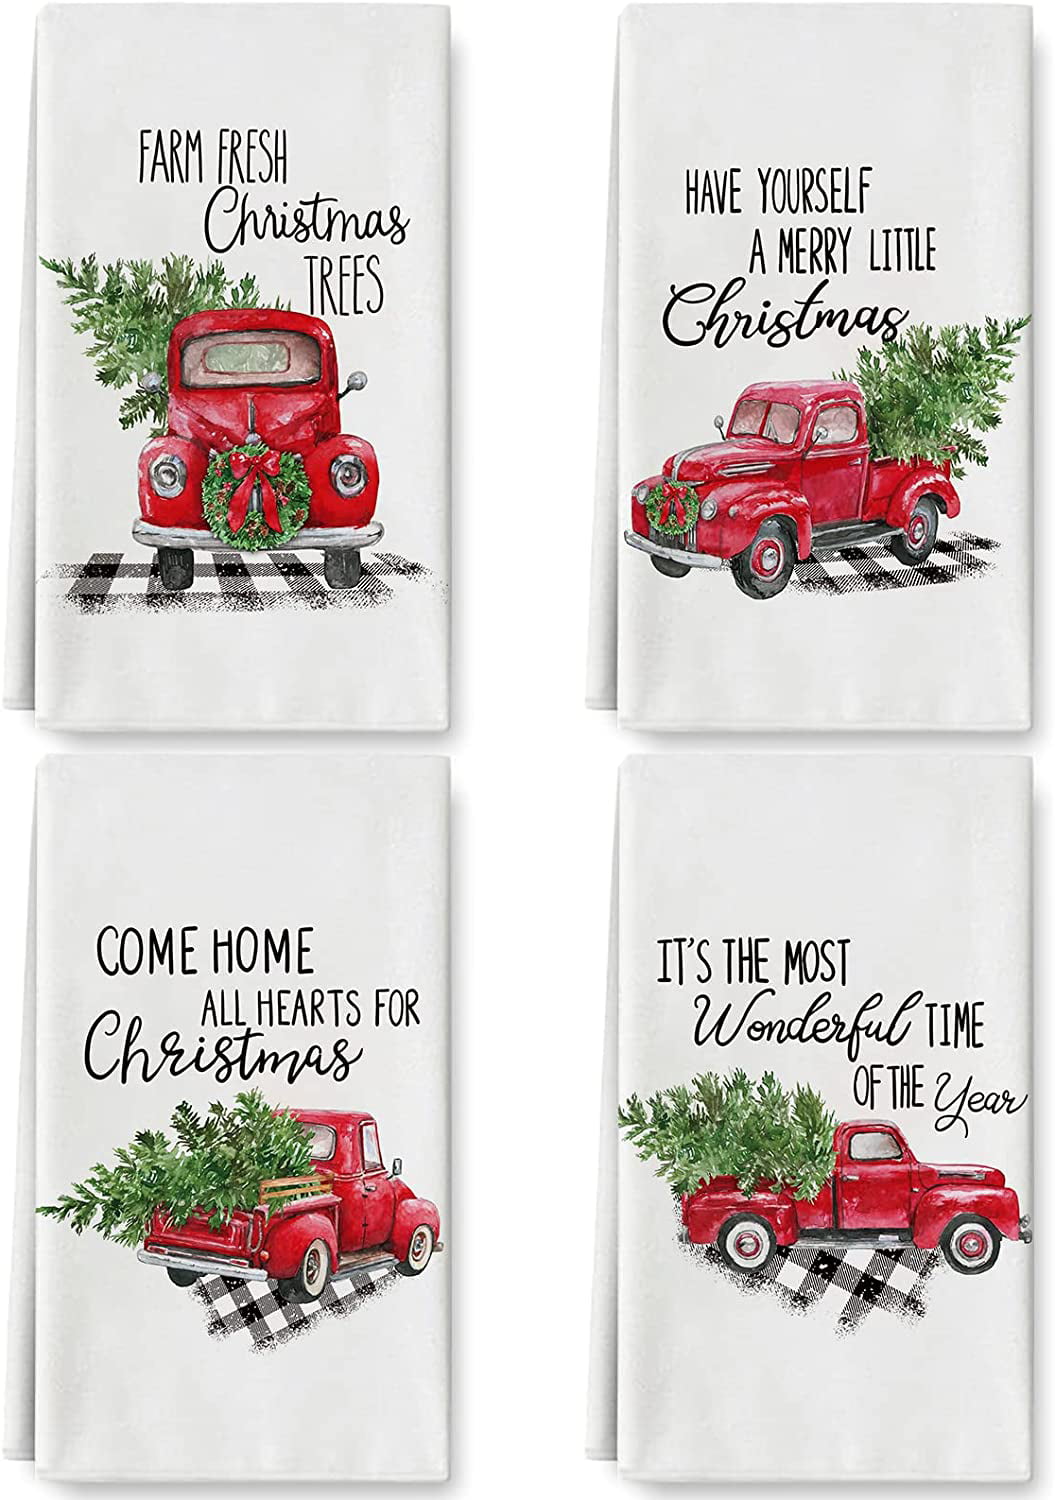 Red Buffalo Plaid Tea Towel, Eat Drink Be Merry Christmas Towel, Chris –  614VinylLLC